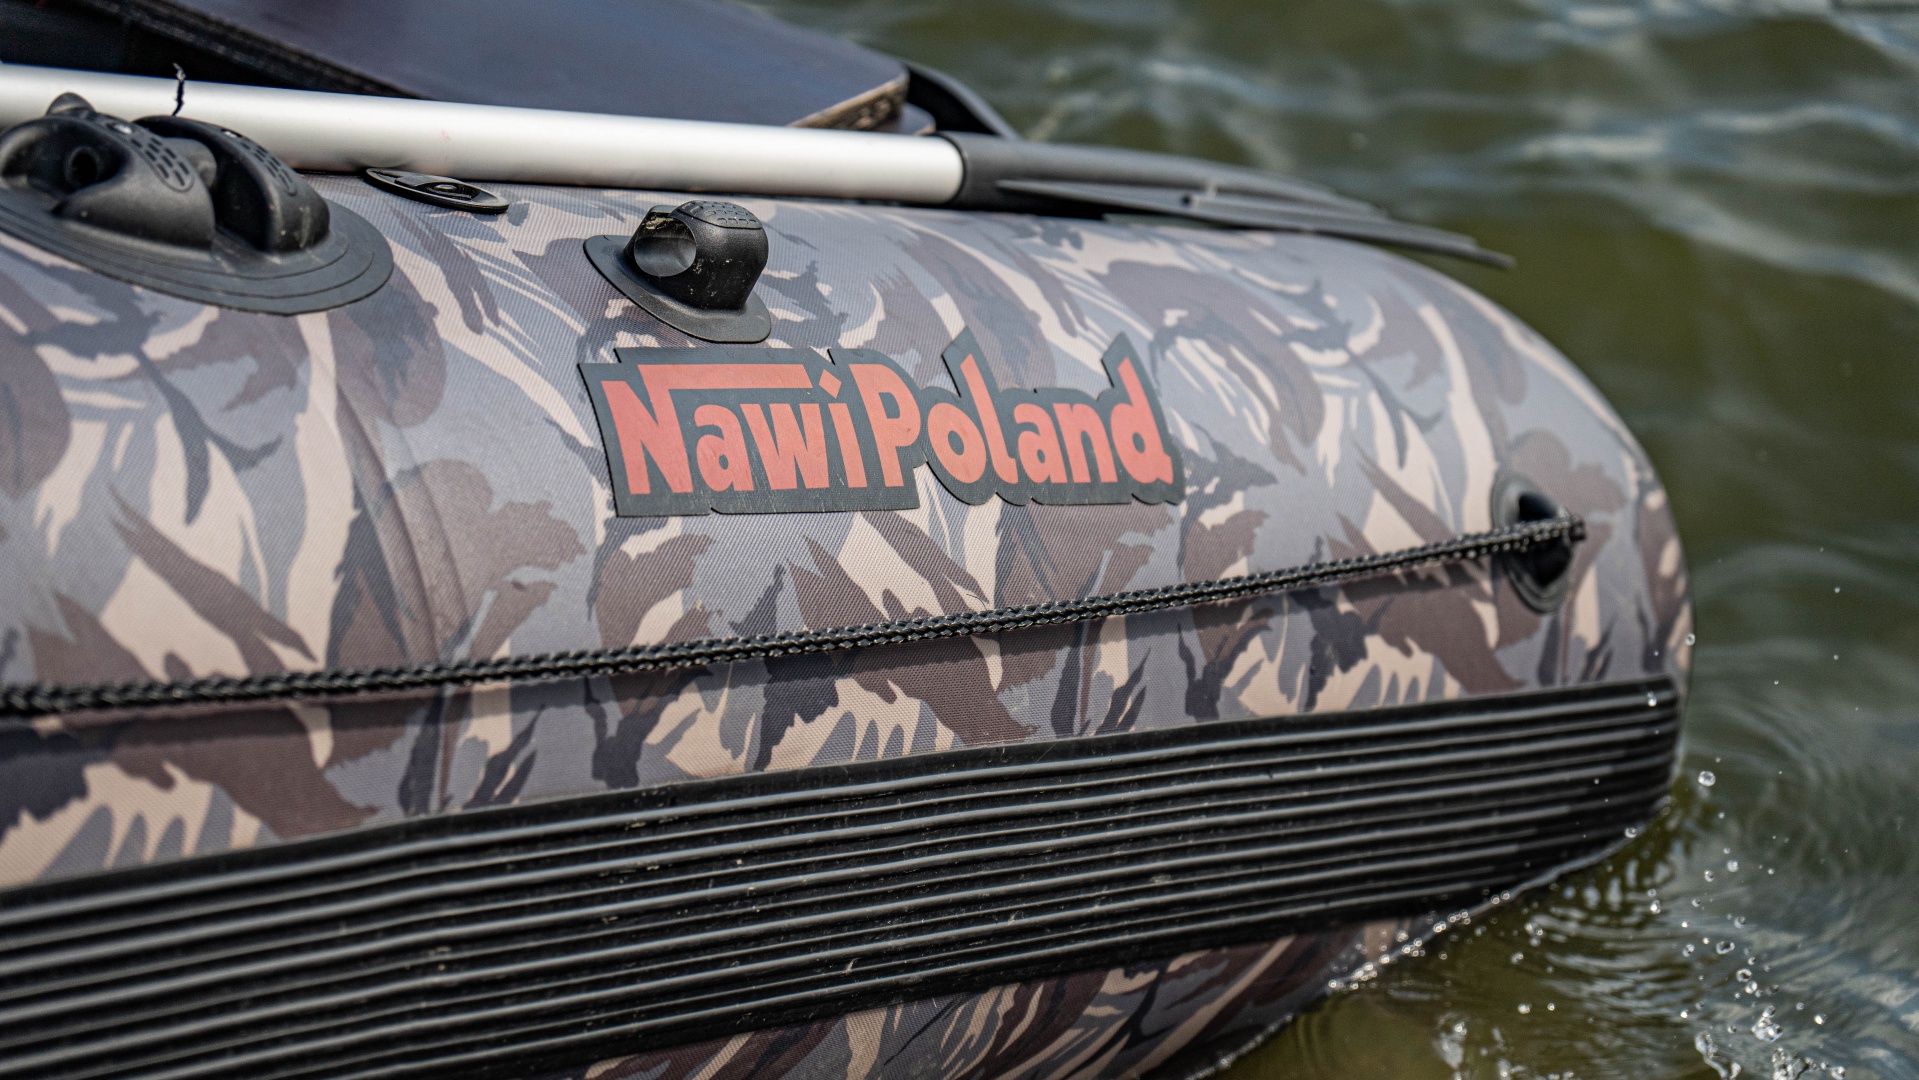 NawiPoland CAT 280 Inflatable Boat  - Katamaran